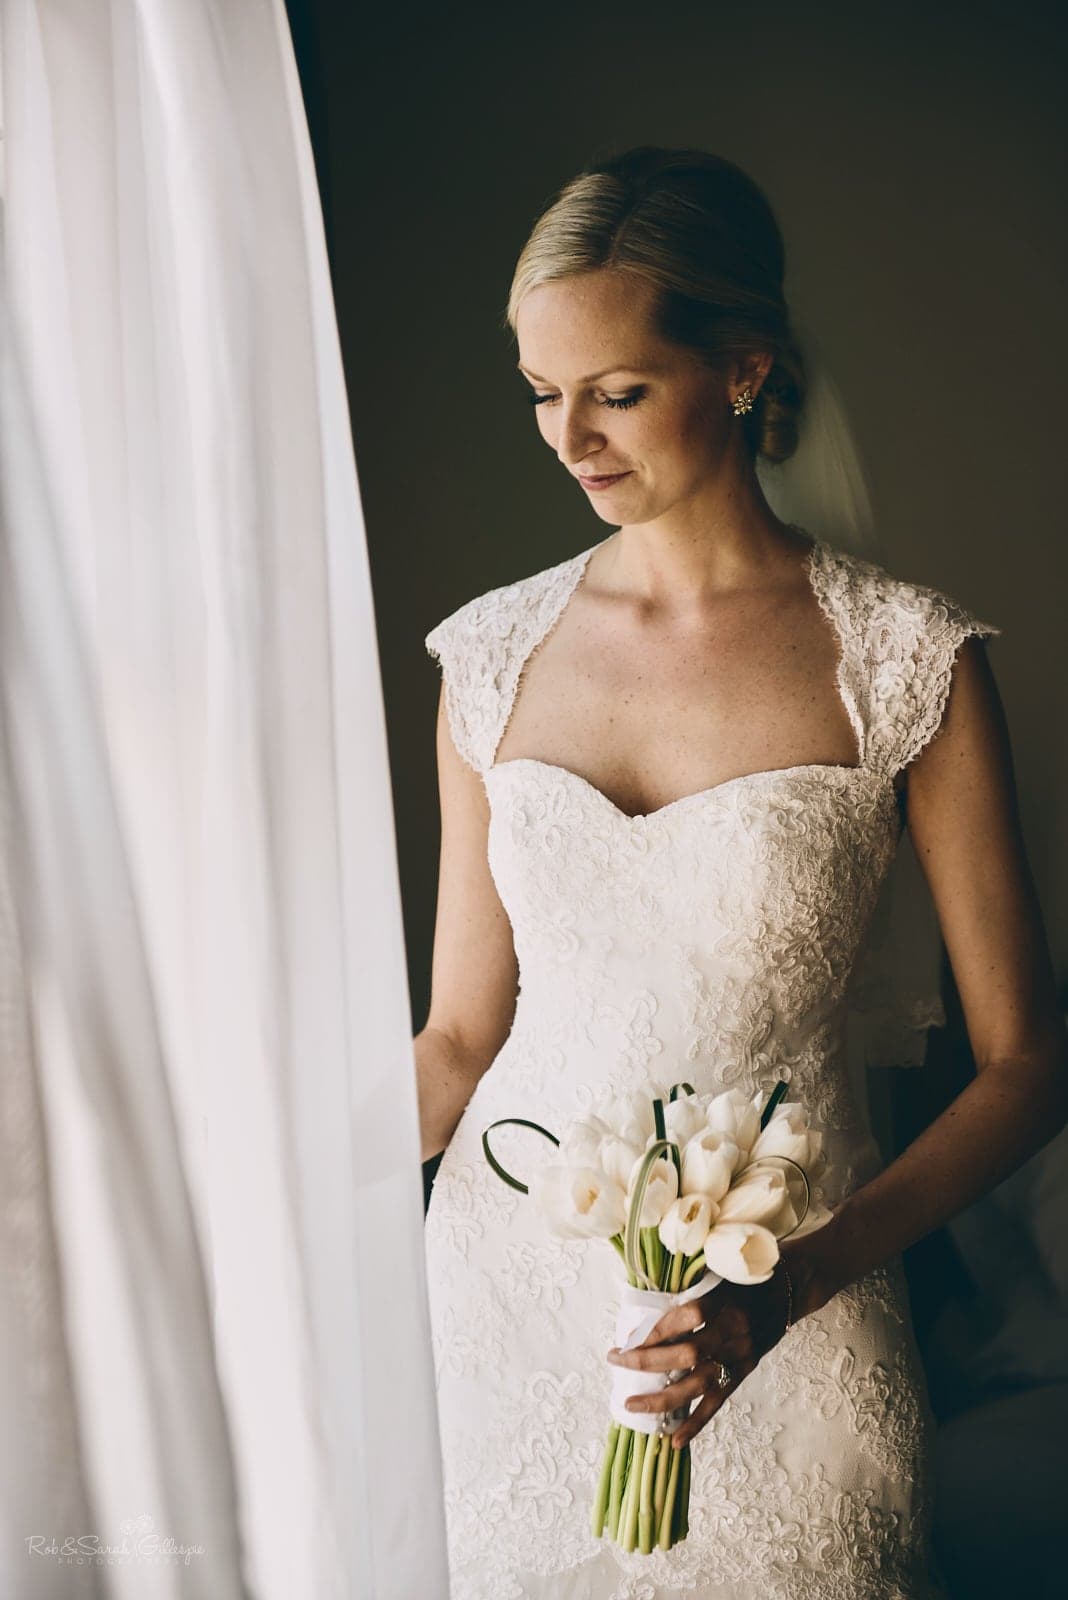 Beautiful bride portrait in window light as curtain billows